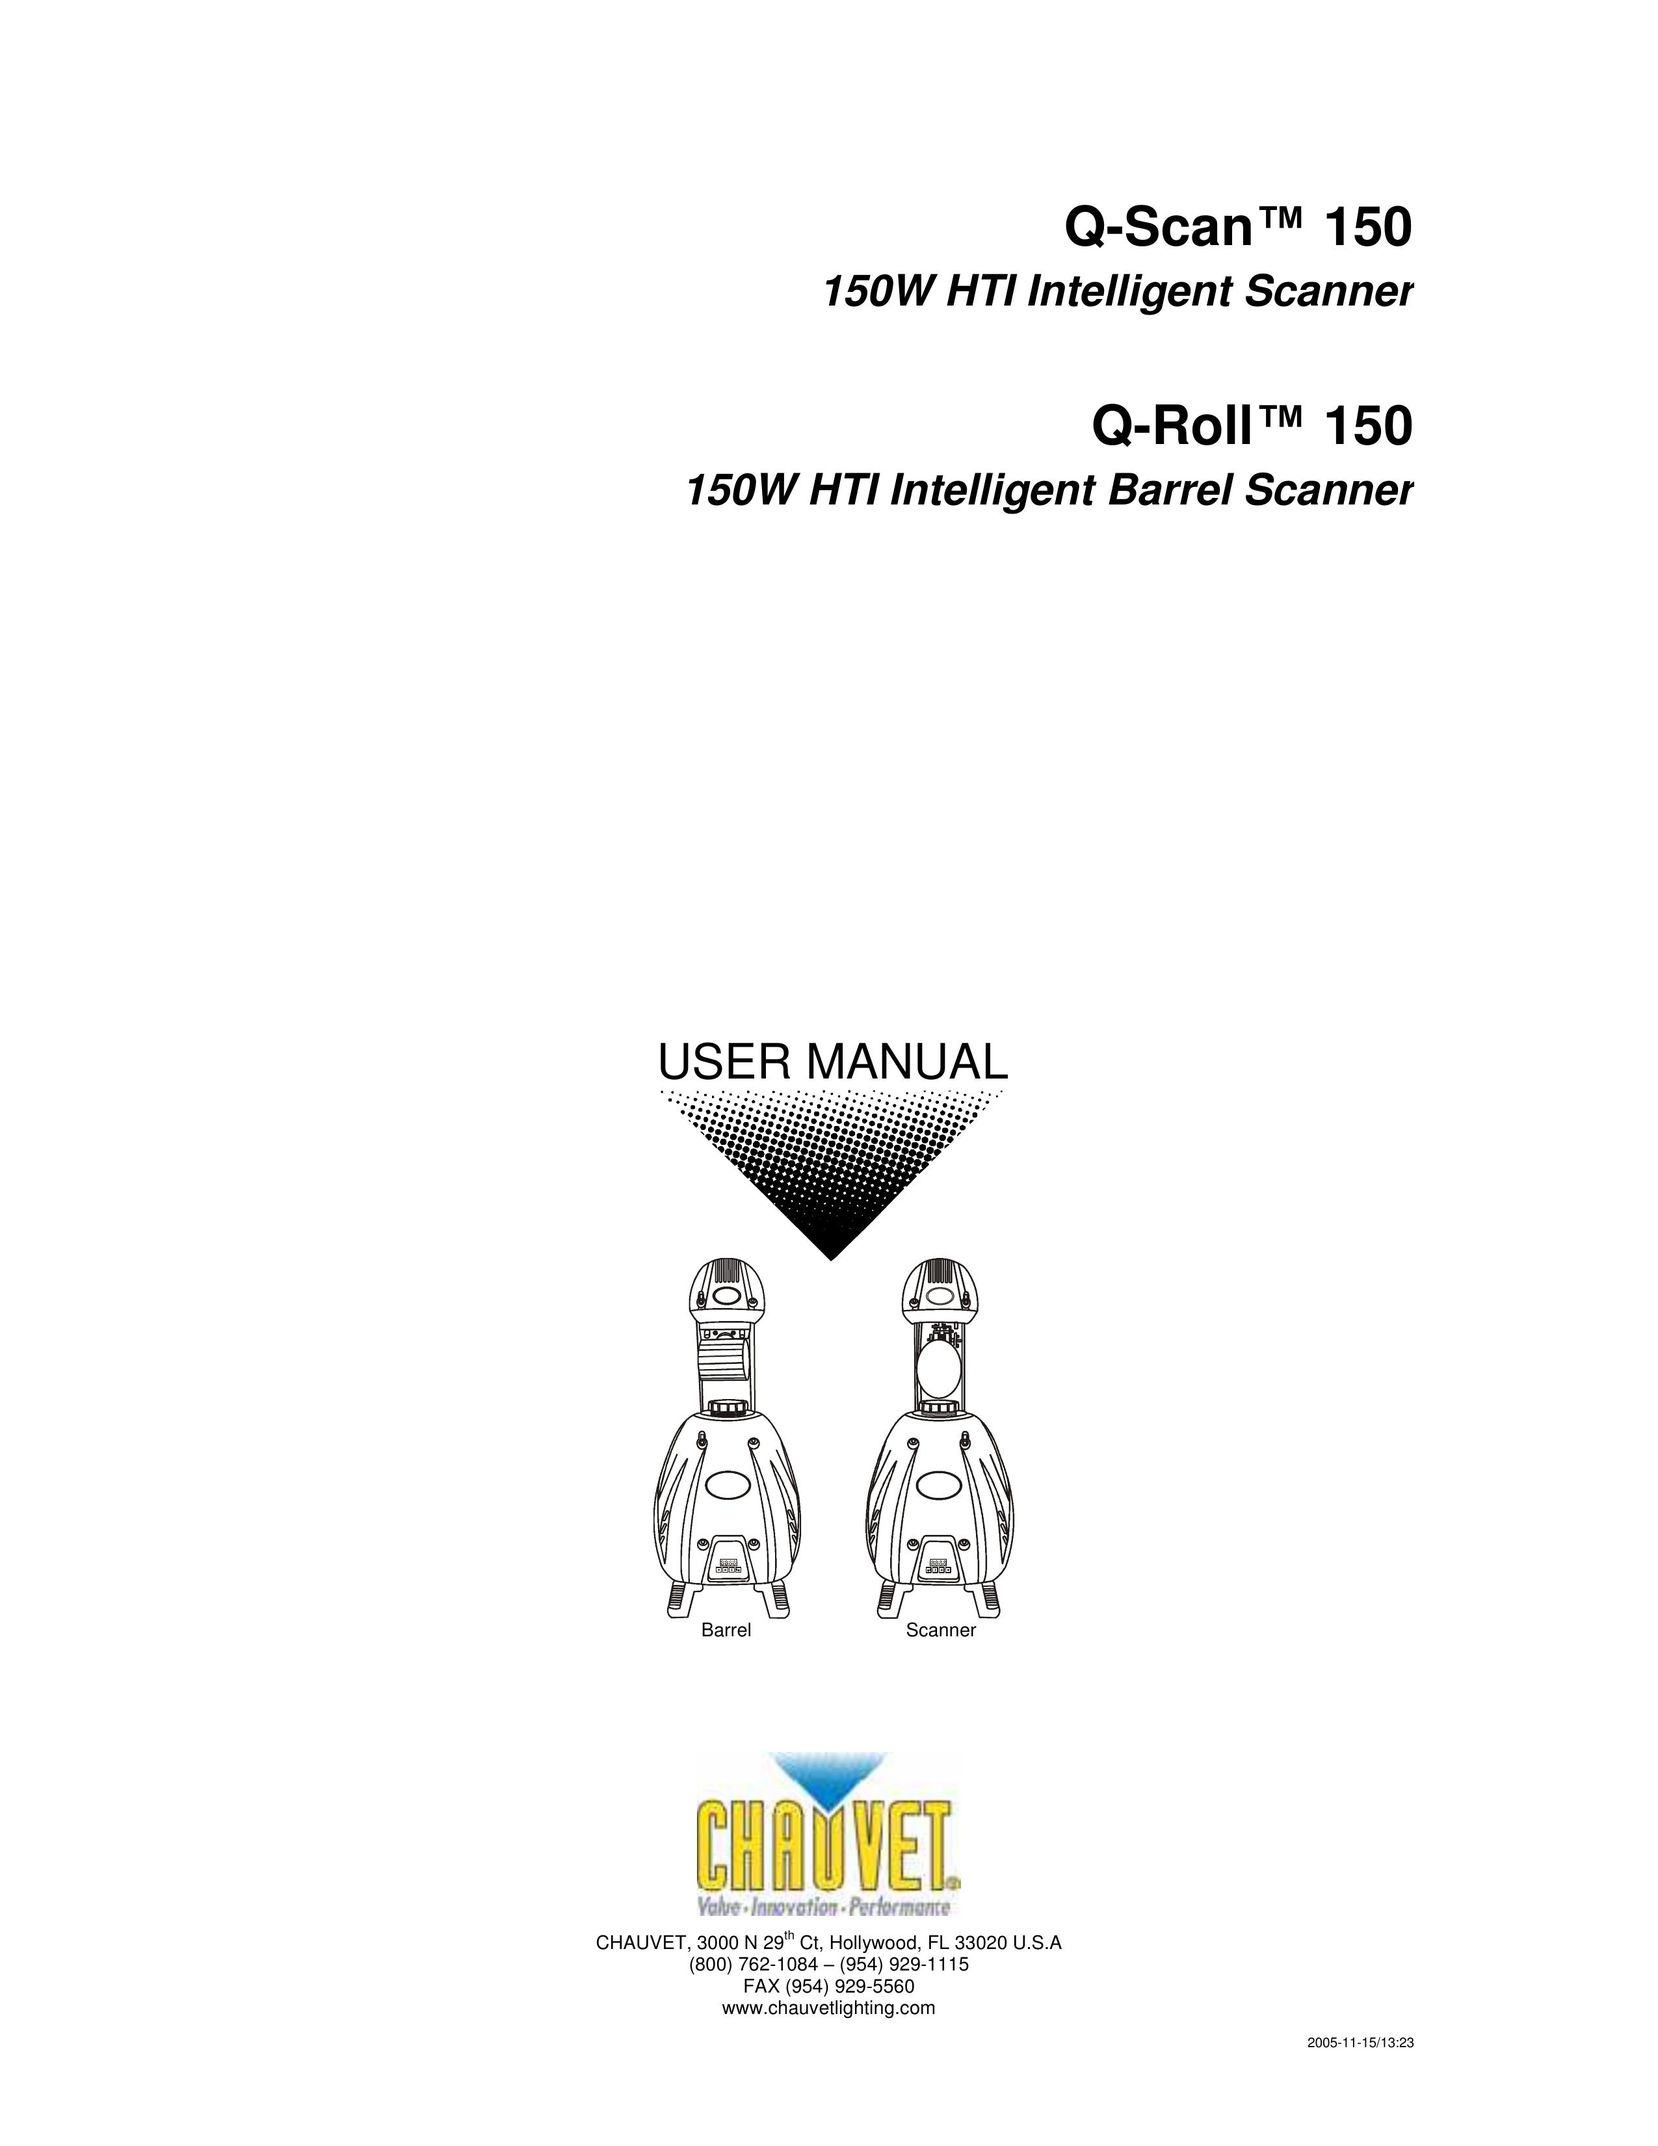 Chauvet Q-Scan 150 Scanner User Manual